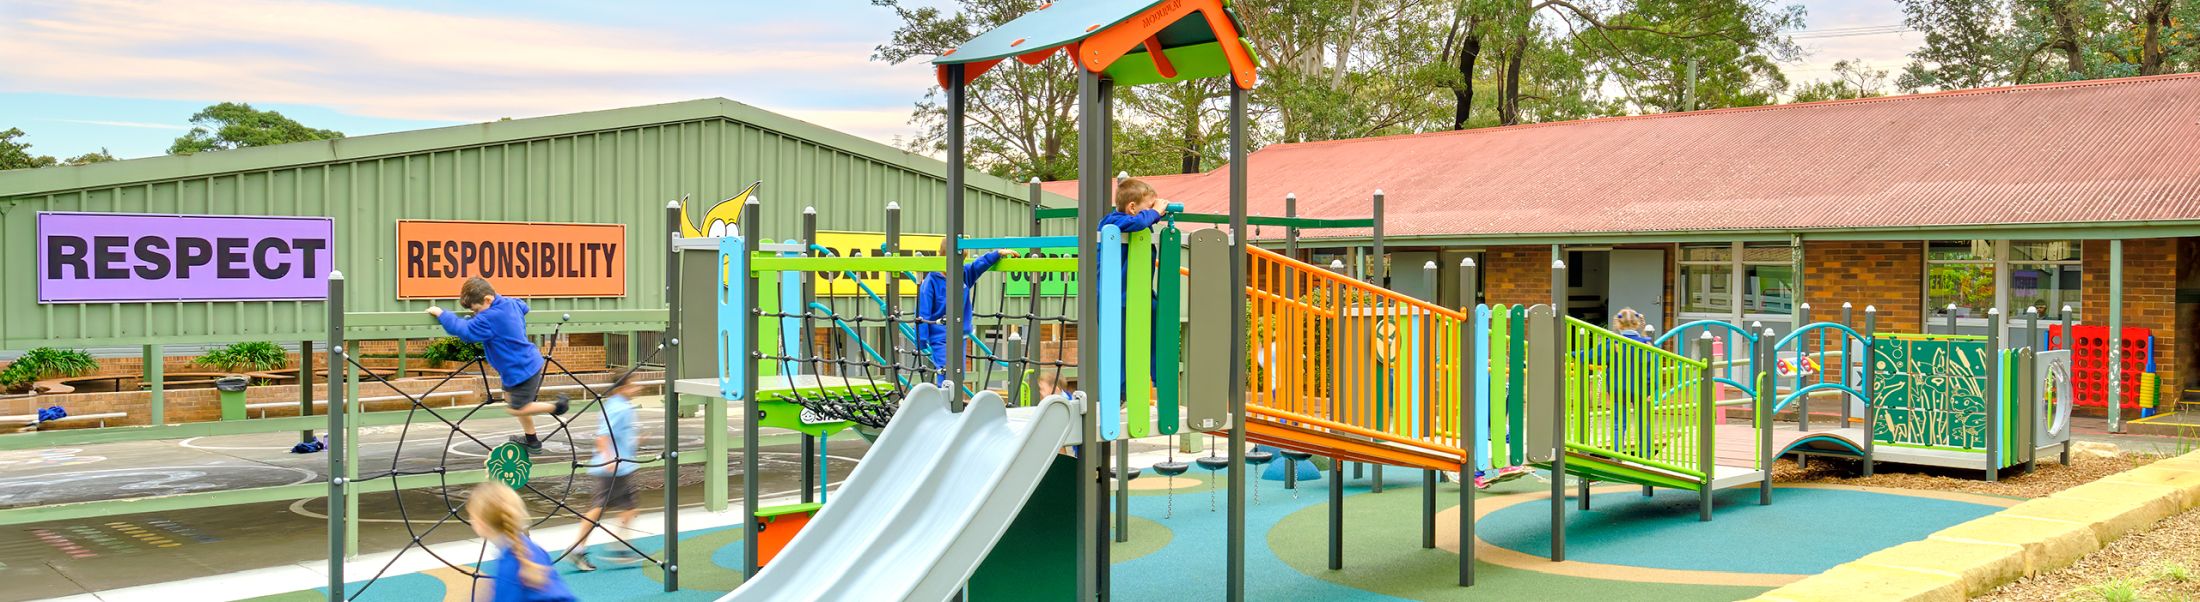 berkeley-public-school_playground_nsw